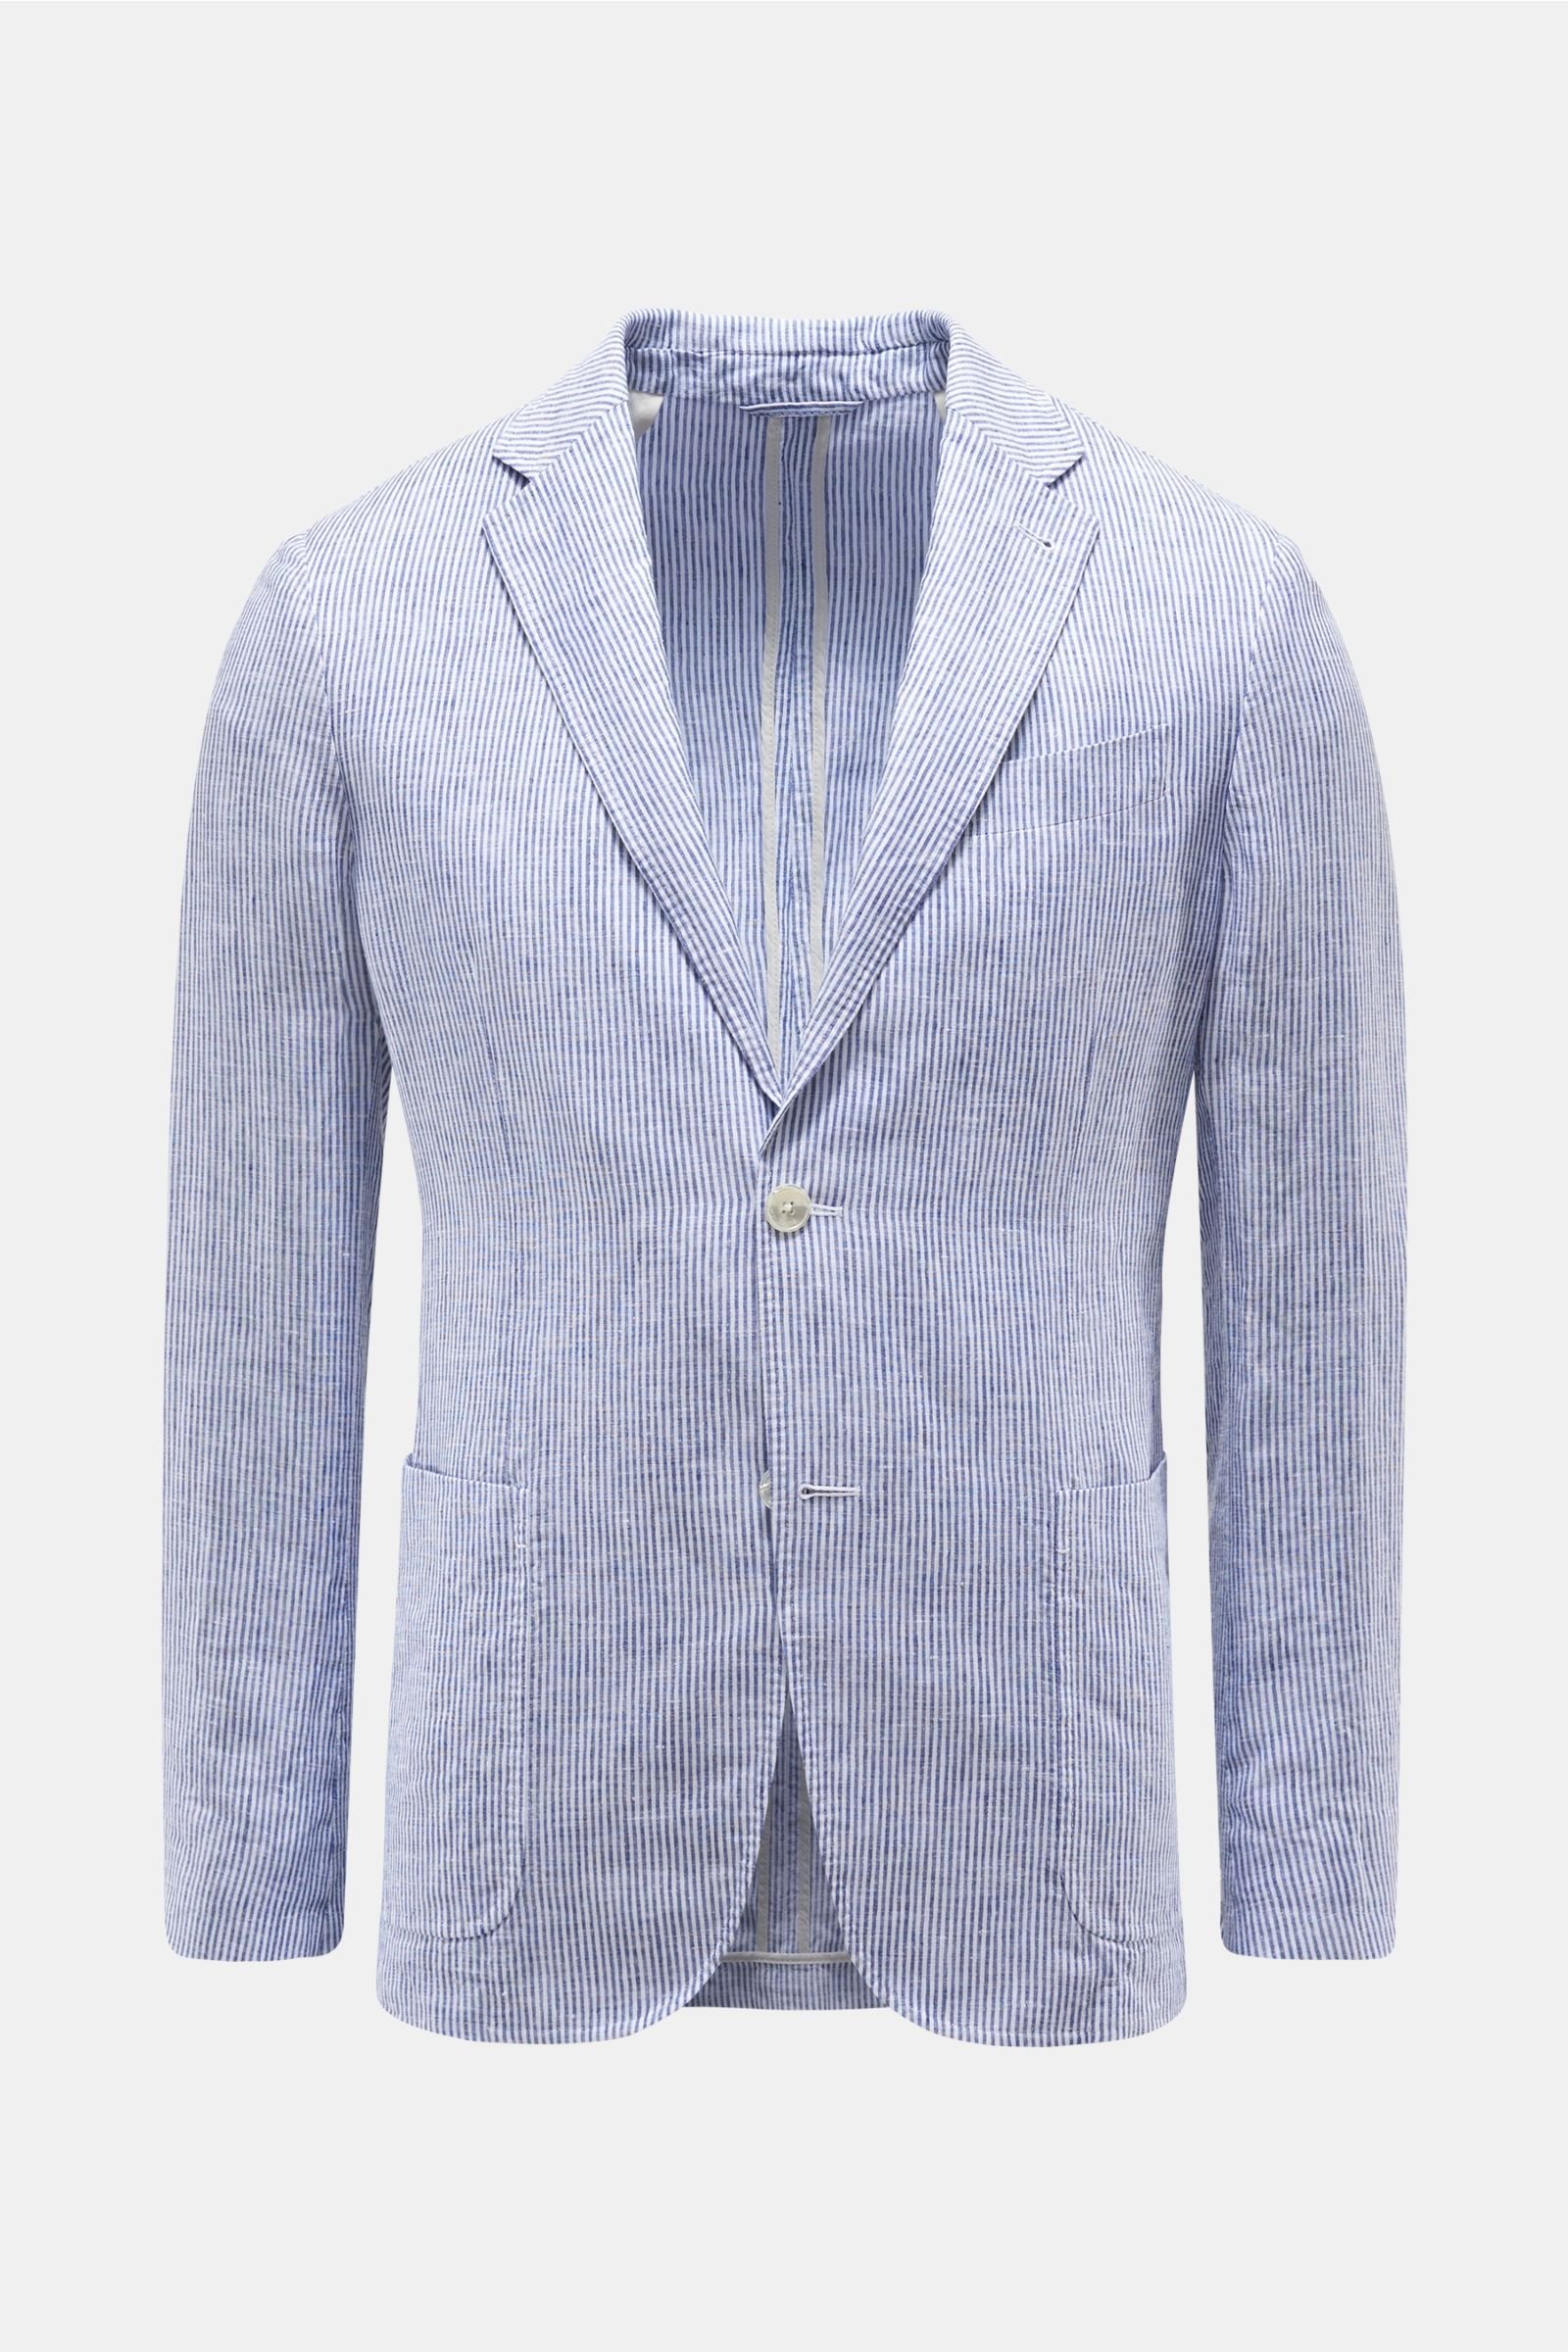 Linen smart-casual jacket grey-blue/white striped